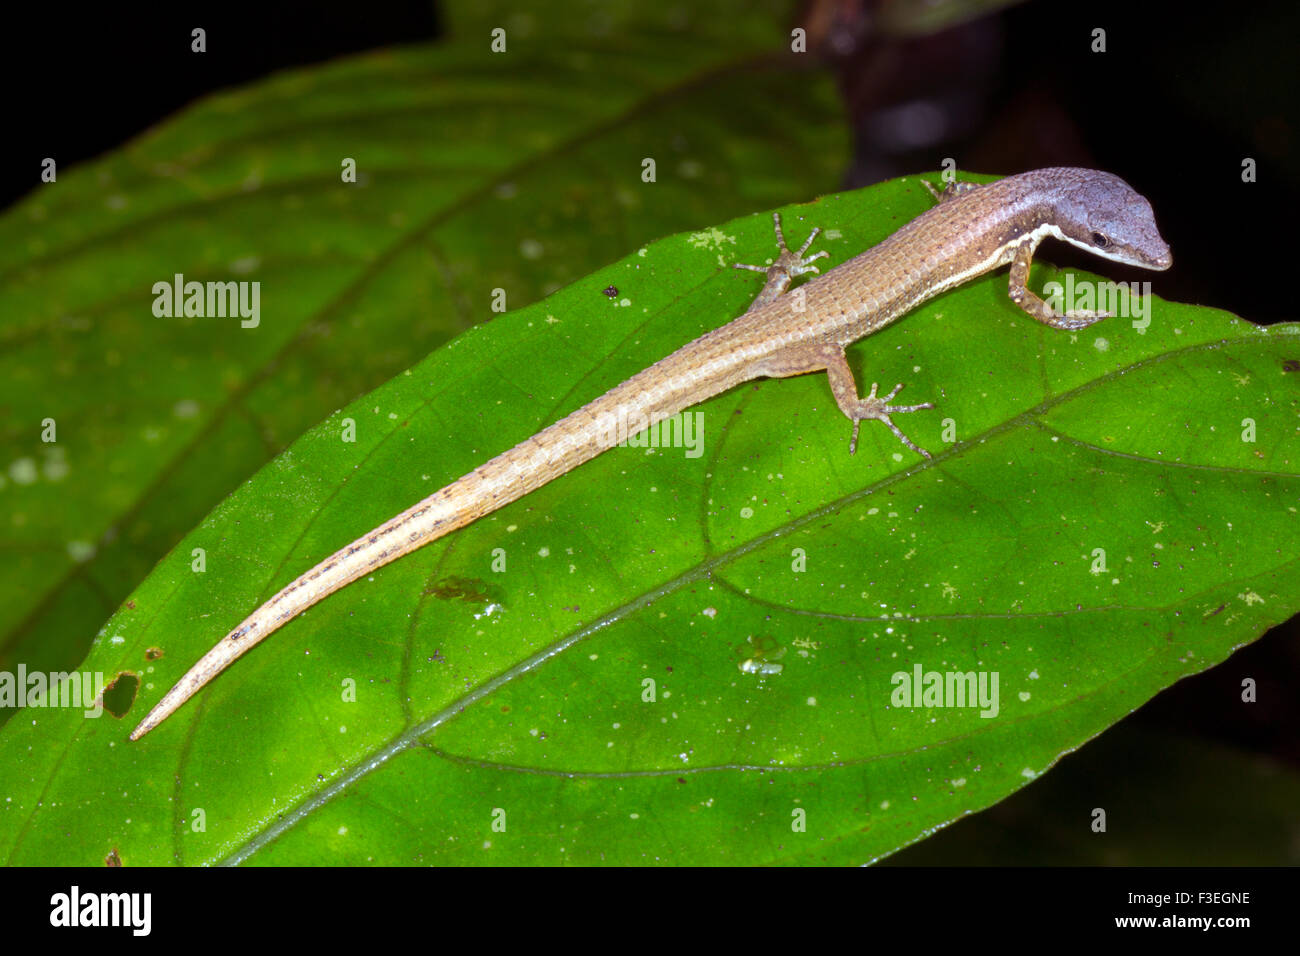 Rainforest lizard (Cercosaura argula, family Gymnophthalmidae) on a leaf in the rainforest, Ecuador Stock Photo